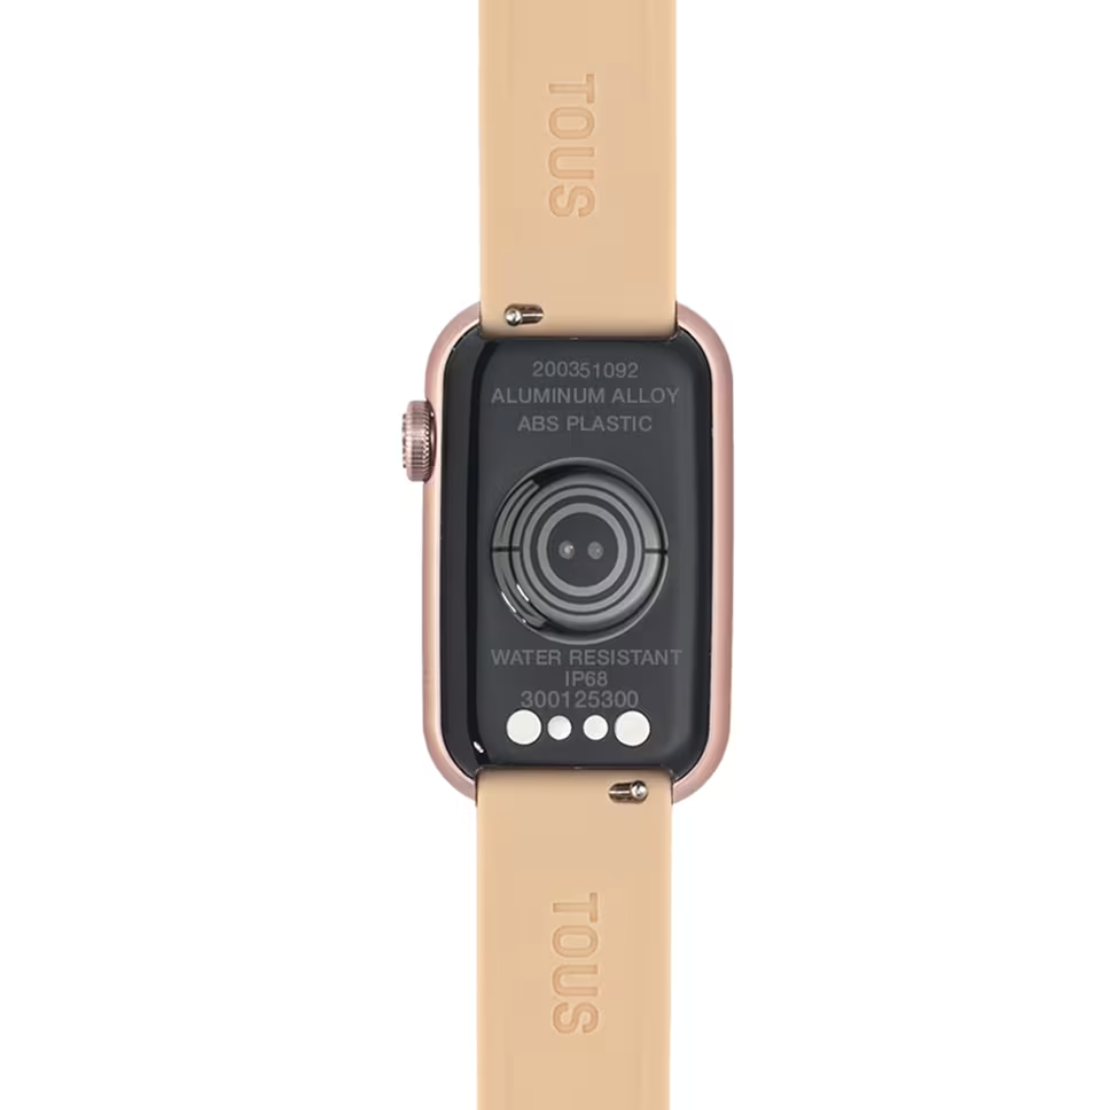 Reloj TOUS smartwatch T-Band rosa / negro